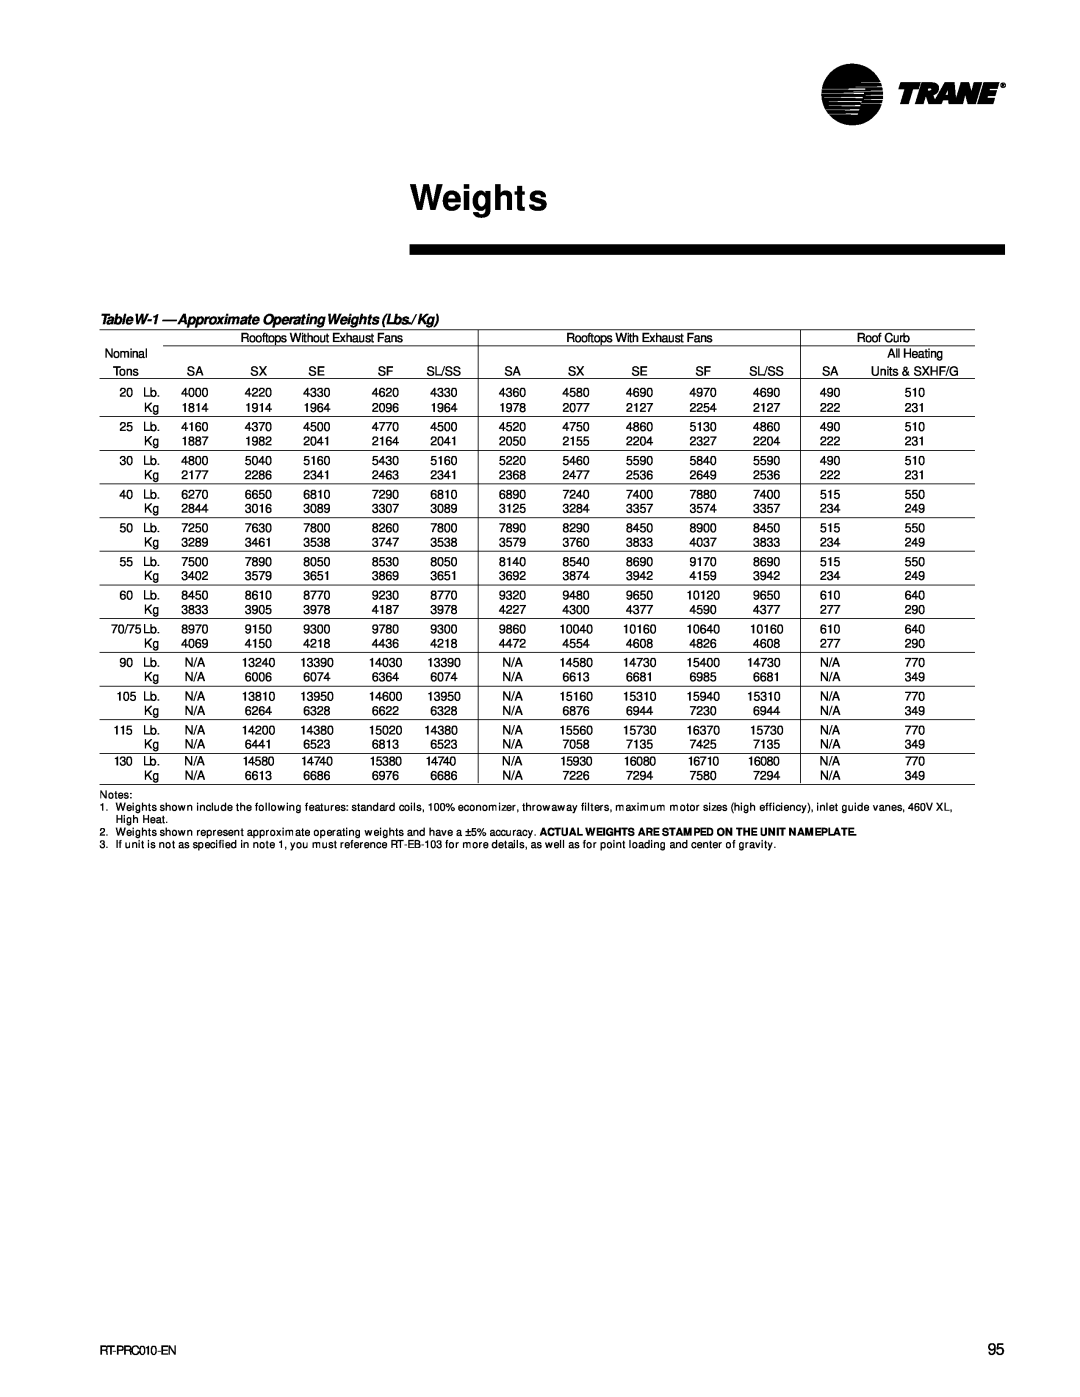 Trane RT-PRC010-EN manual TableW-1 —ApproximateOperatingWeights Lbs./Kg 